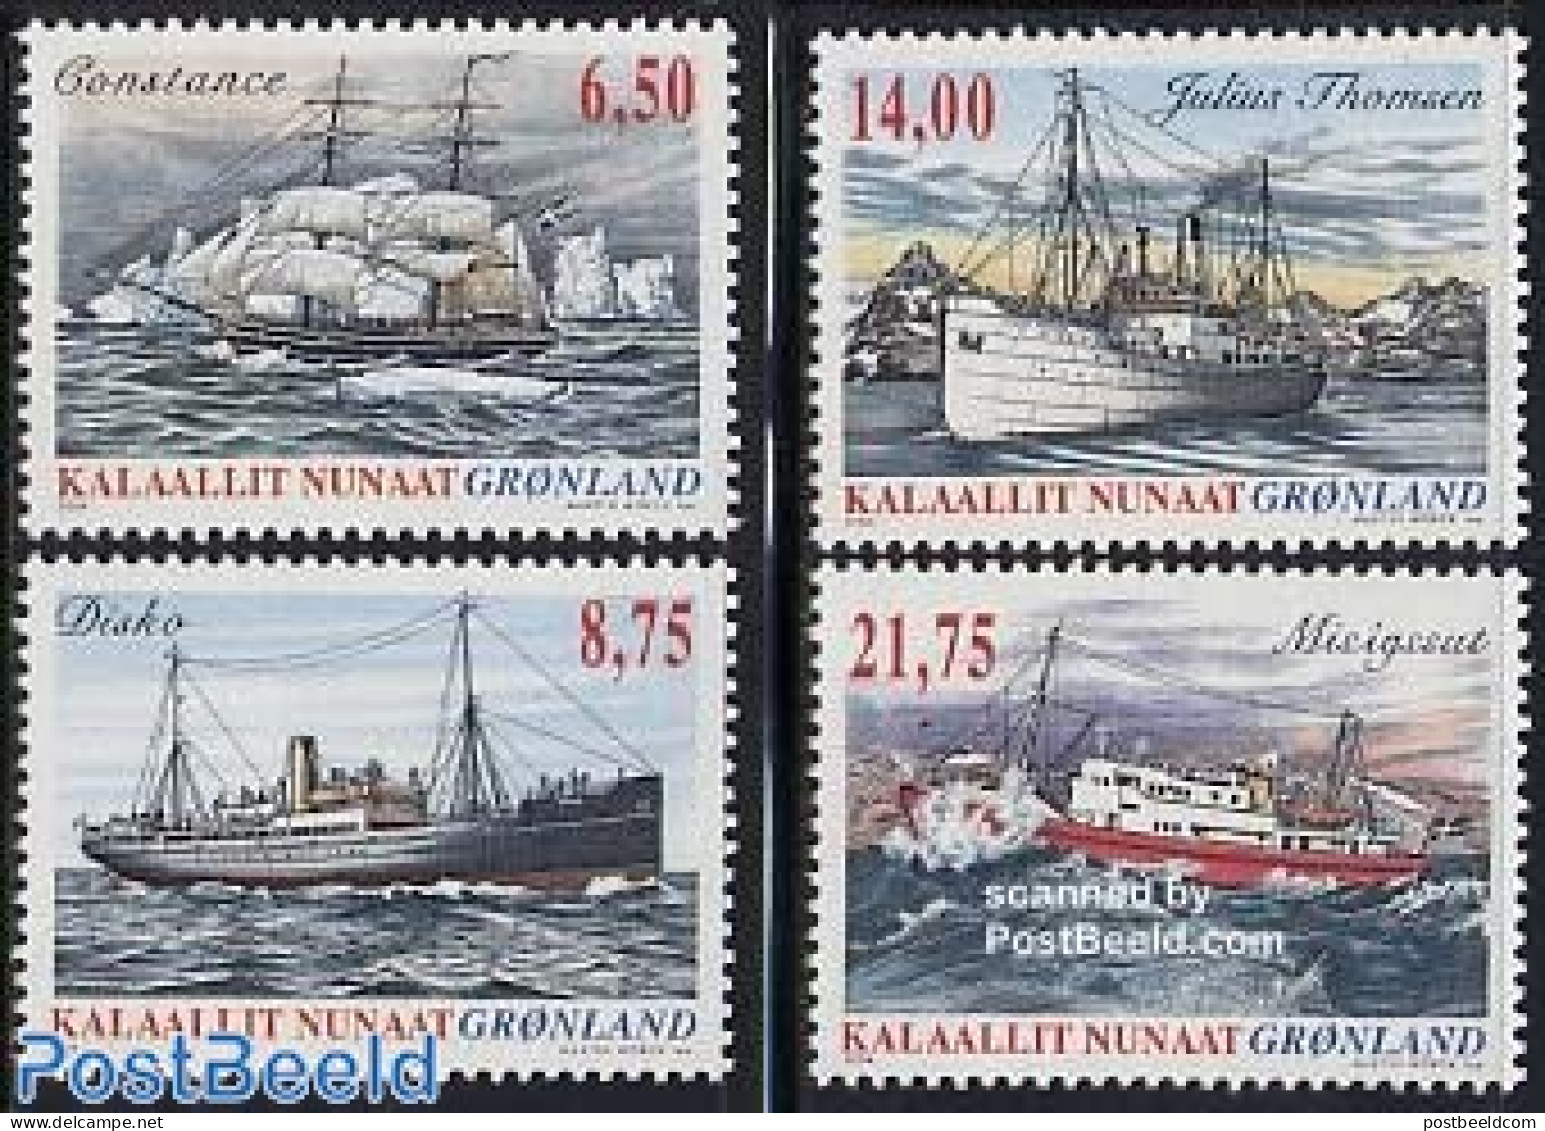 Greenland 2004 Ships 4v, Mint NH, Transport - Ships And Boats - Neufs